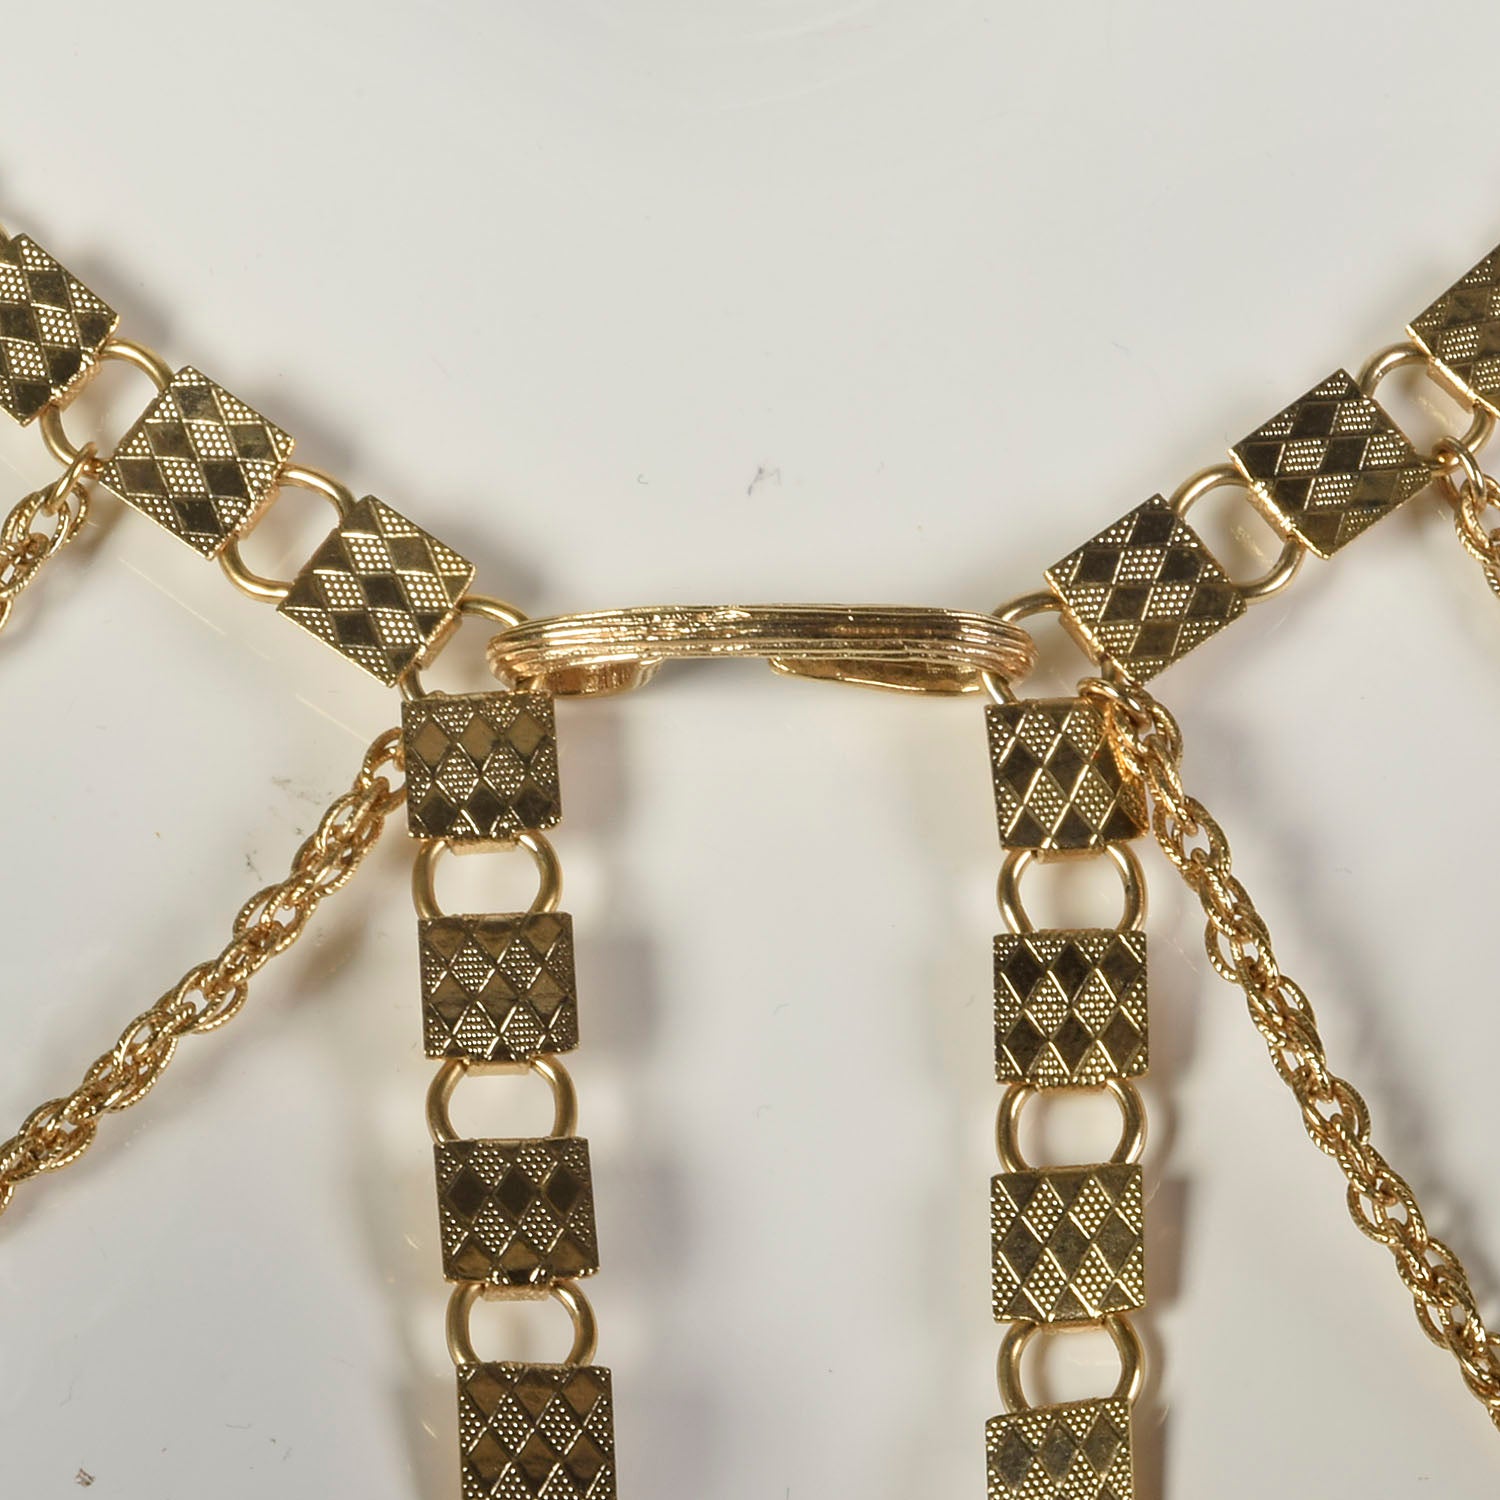 OSFM 1970s Trifari Chain Vest Gold Tone Sexy Fetish Jewelry